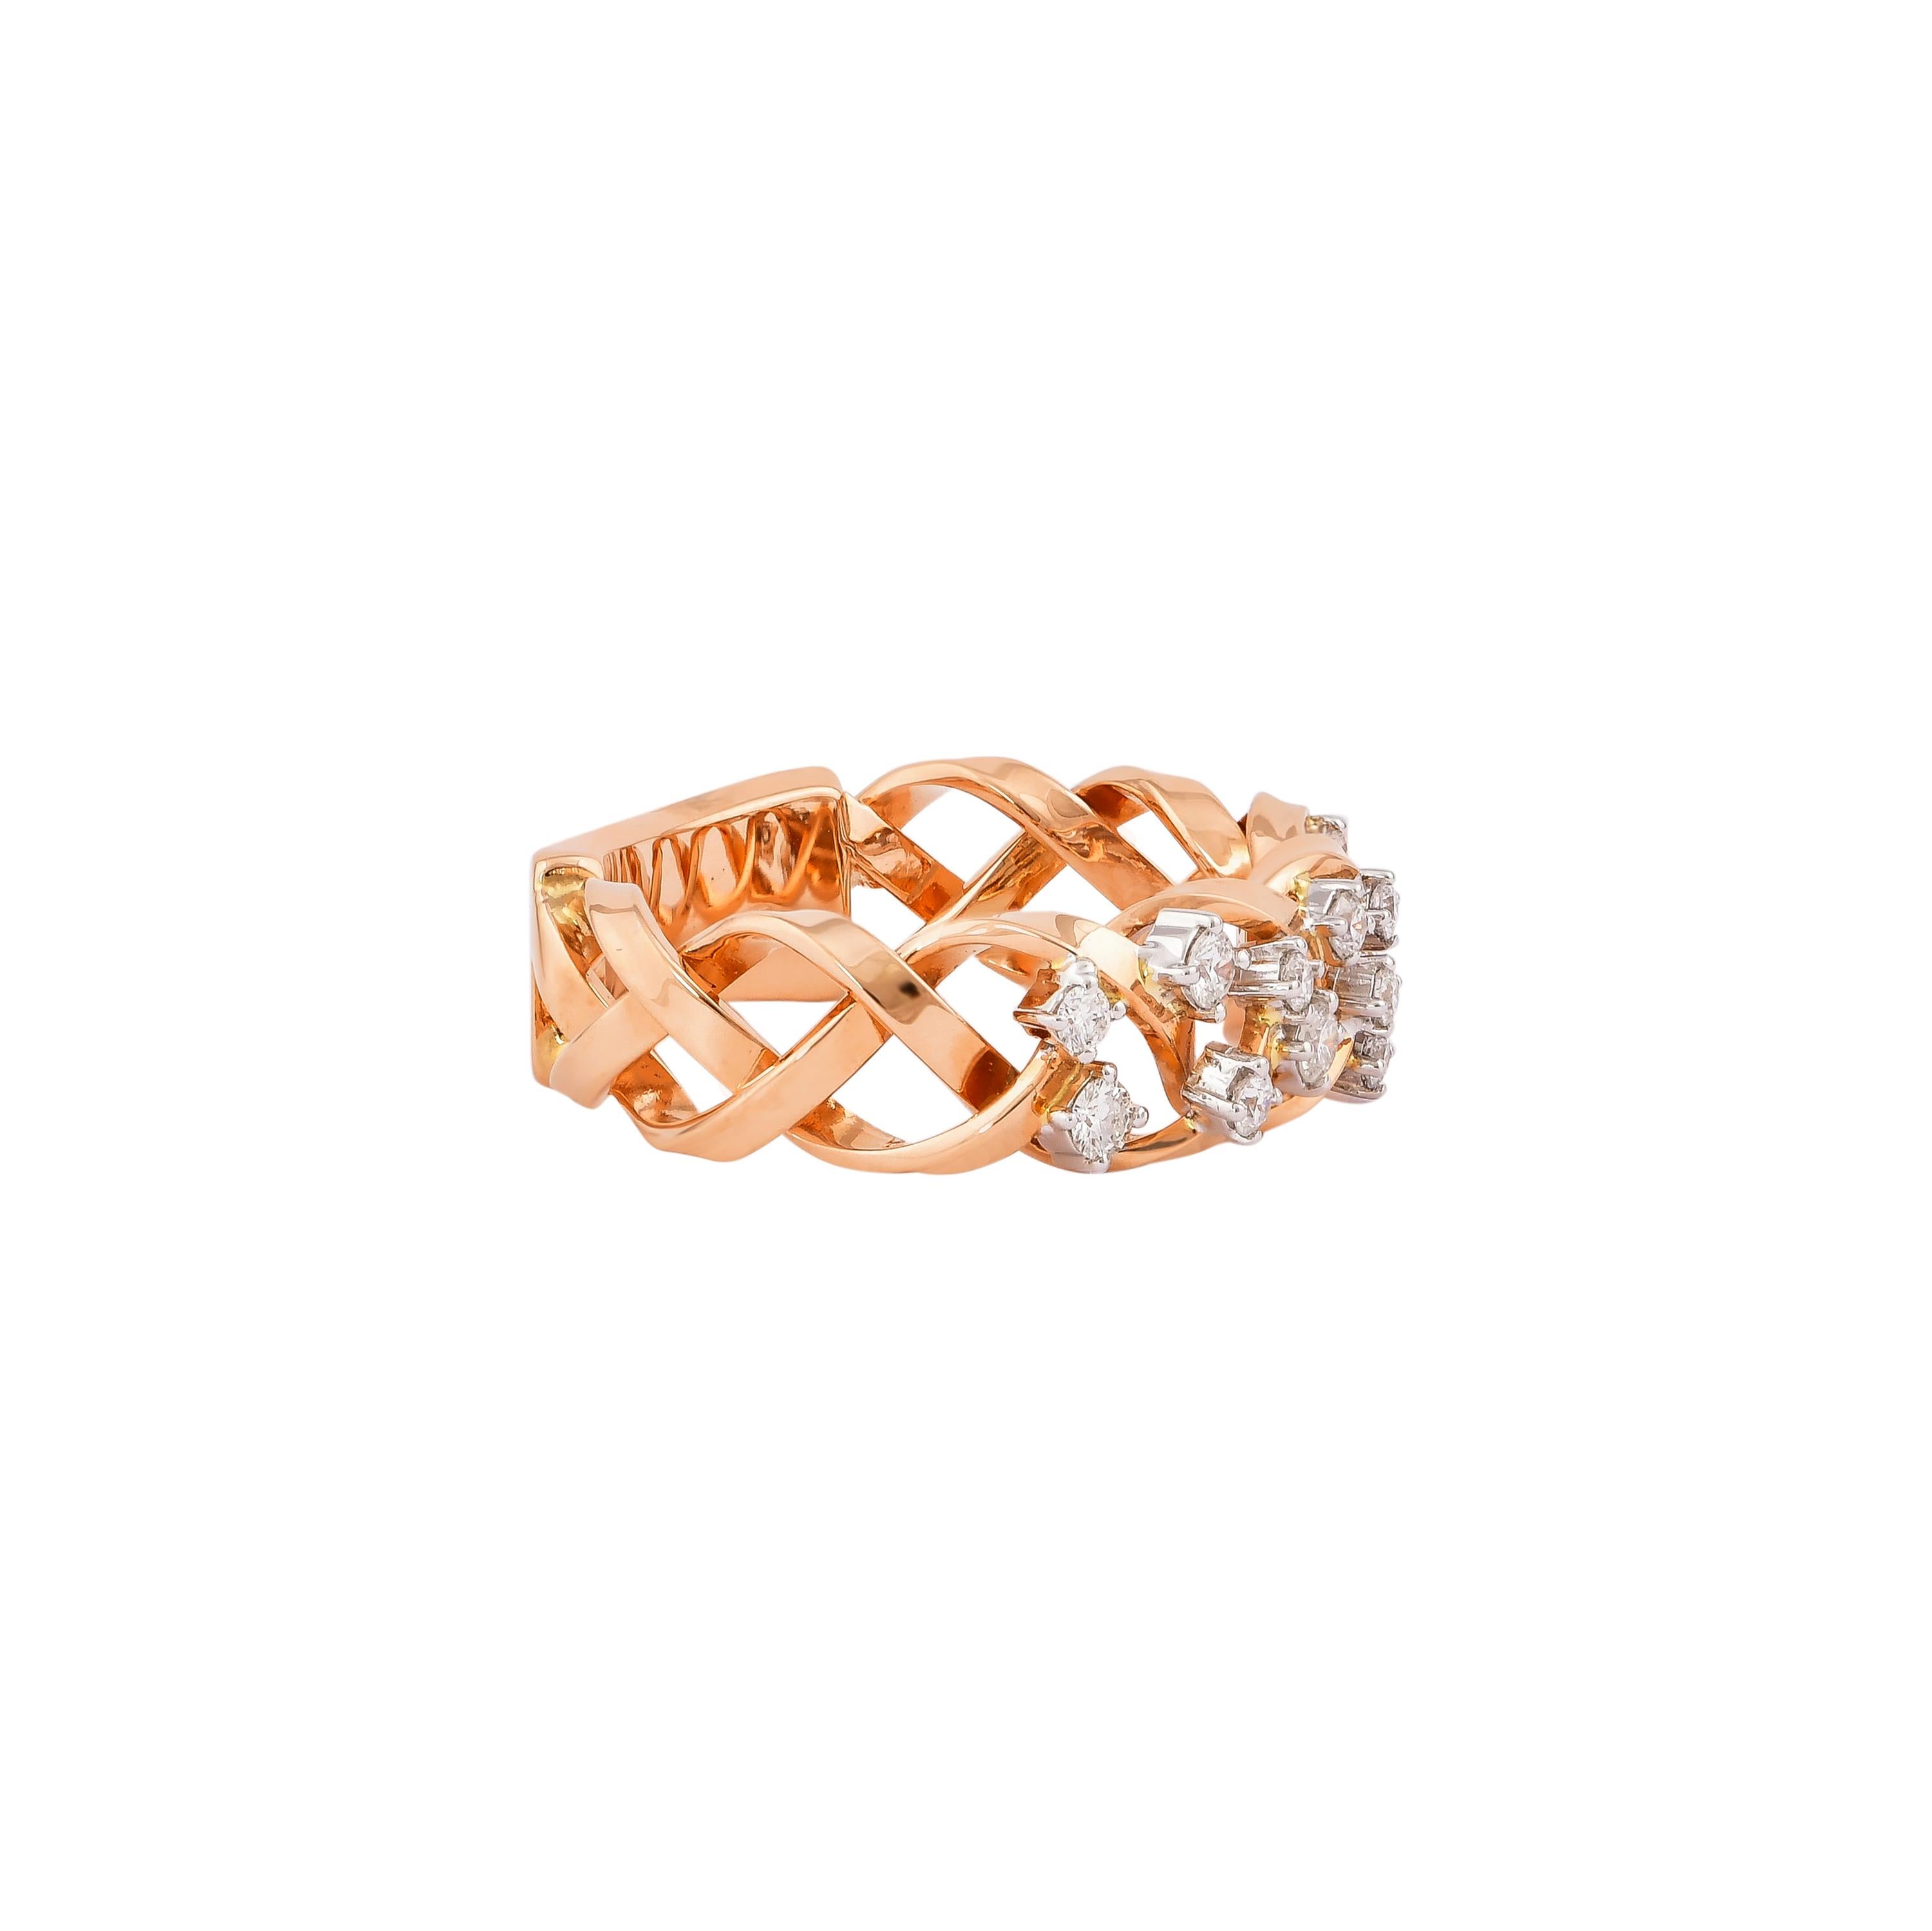 Unique and Designer Cocktail Rings by Sunita Nahata Fine Design.

Classic Diamond ring in 18K White & Rose gold. 

Diamond: 0.178 carat, 2.30mm size, round shape, G colour, VS clarity.
Diamond: 0.1 carat, 1.90mm size, round shape, G colour, VS